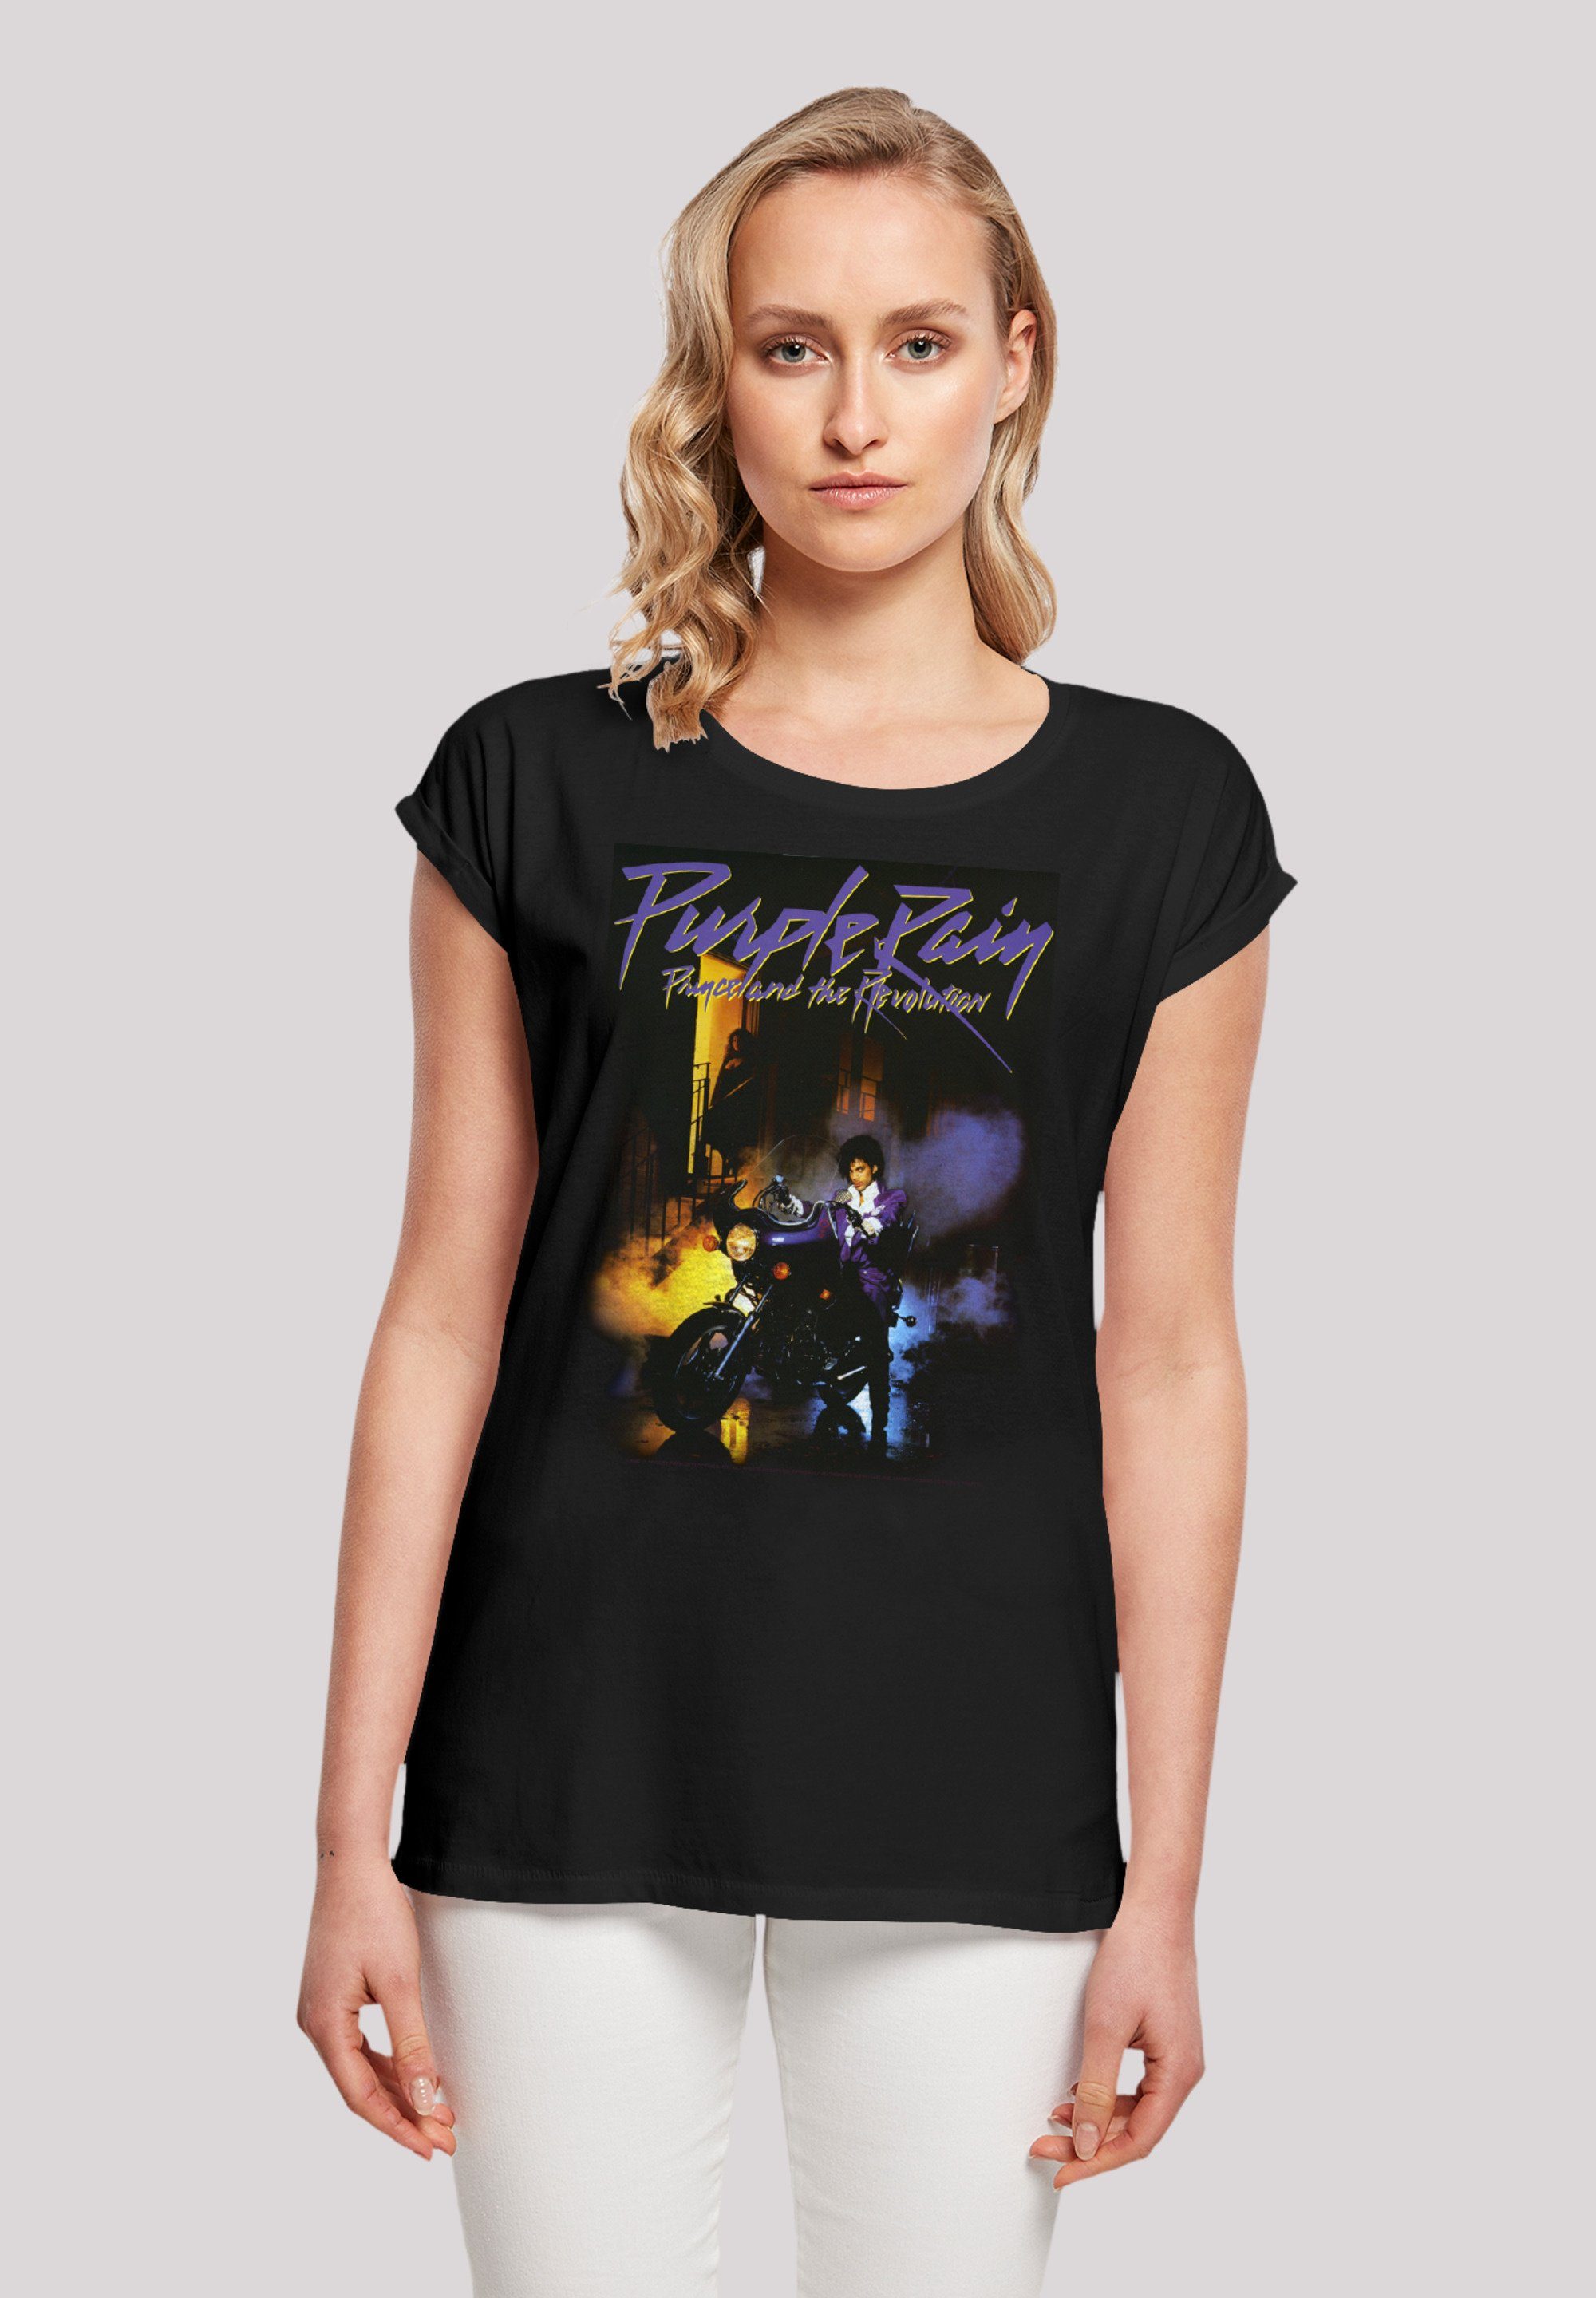 F4NT4STIC T-Shirt Prince Musik Purple Rain Premium Qualität, Rock-Musik, Band